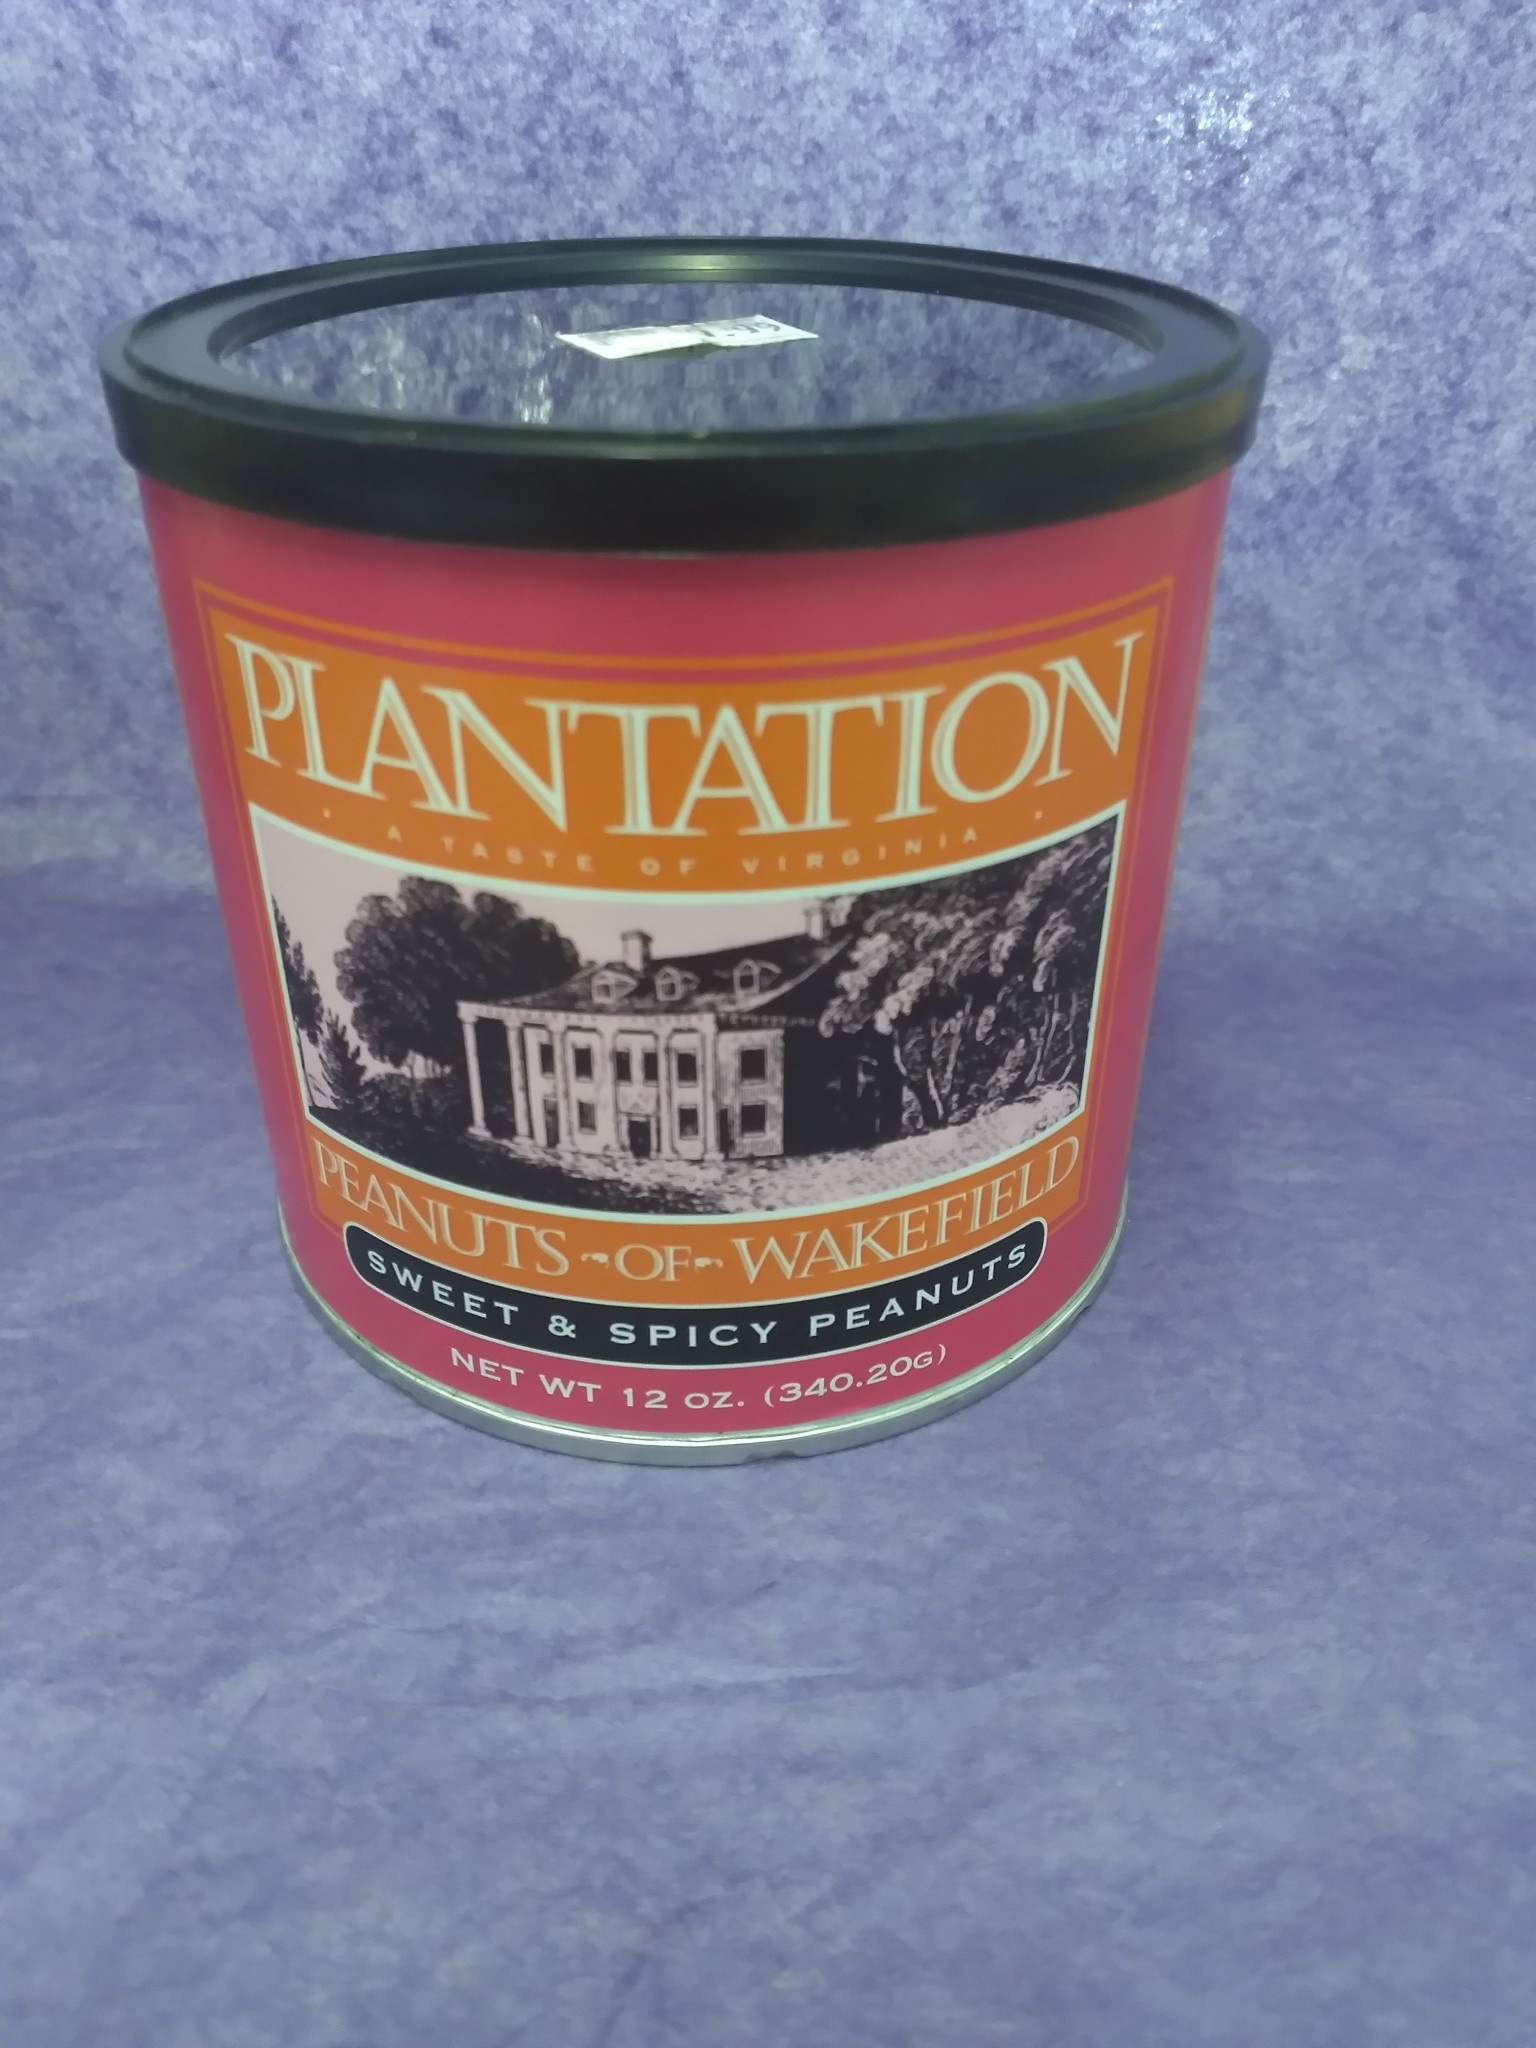 Plantation Peanuts of Wakefield Plantation Peanuts 12 oz. Sweet & Spicy